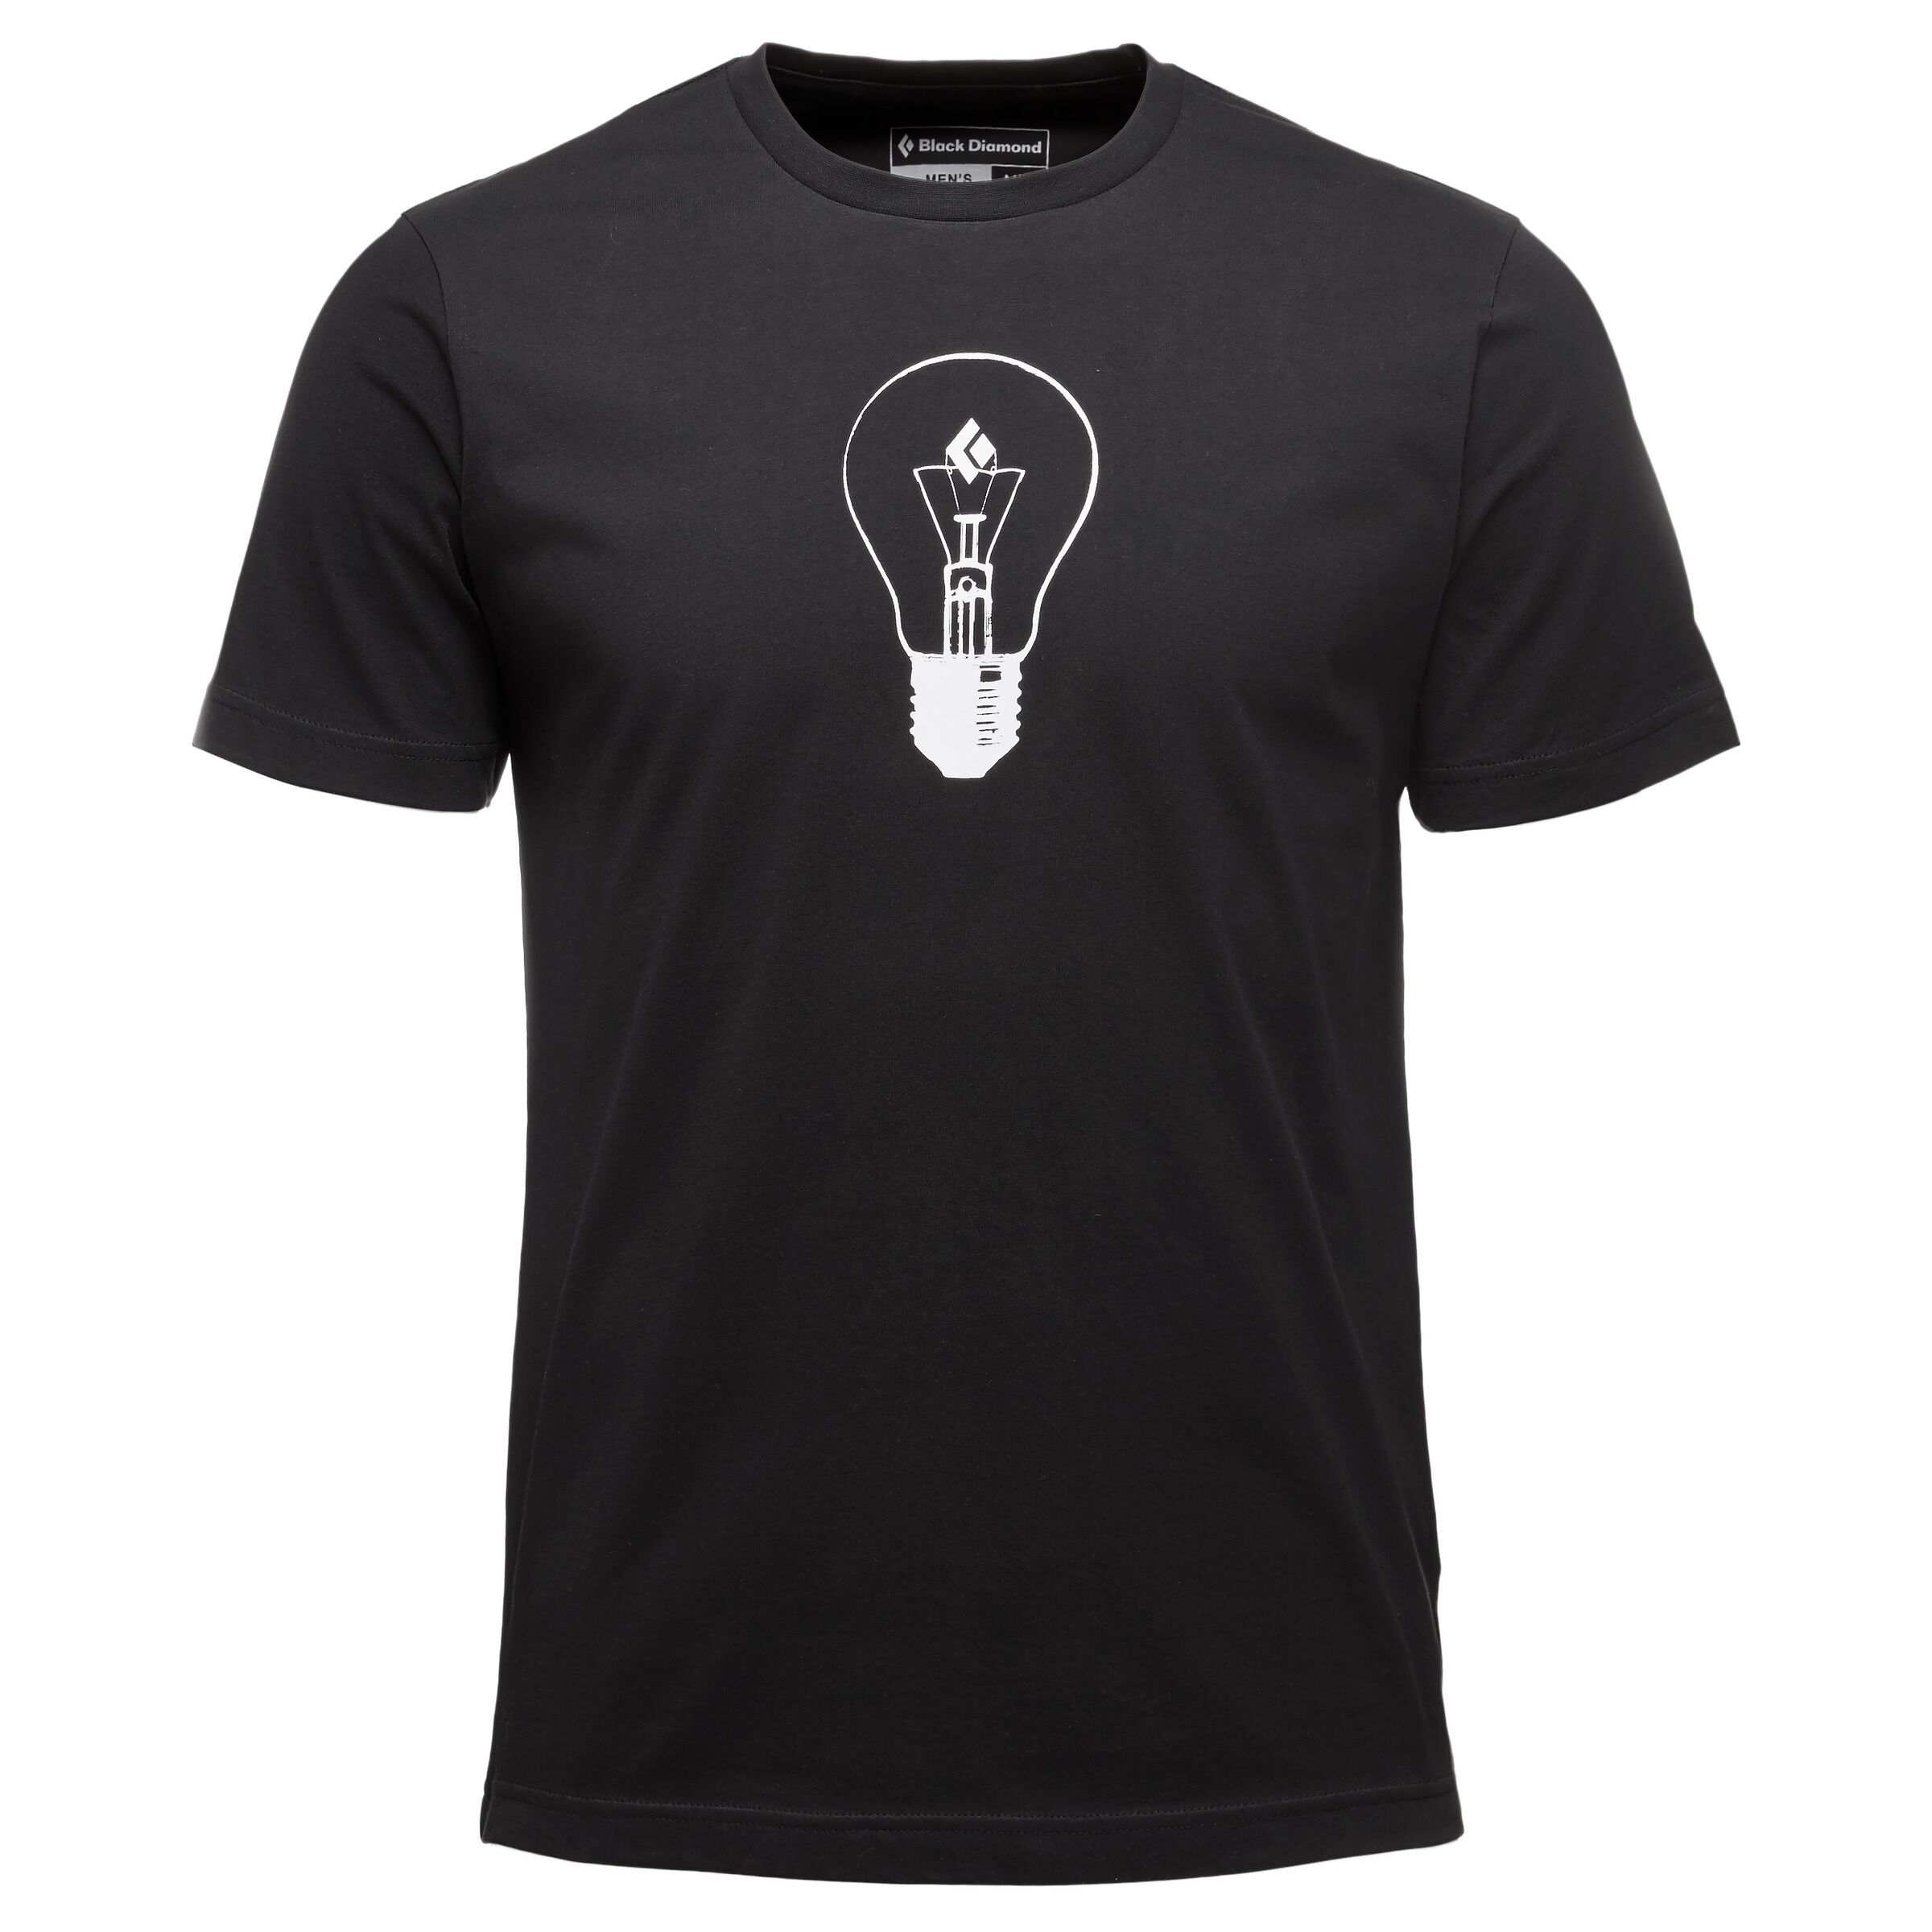 Black Diamond - Bd Idea Tee - T-shirt - Uomo